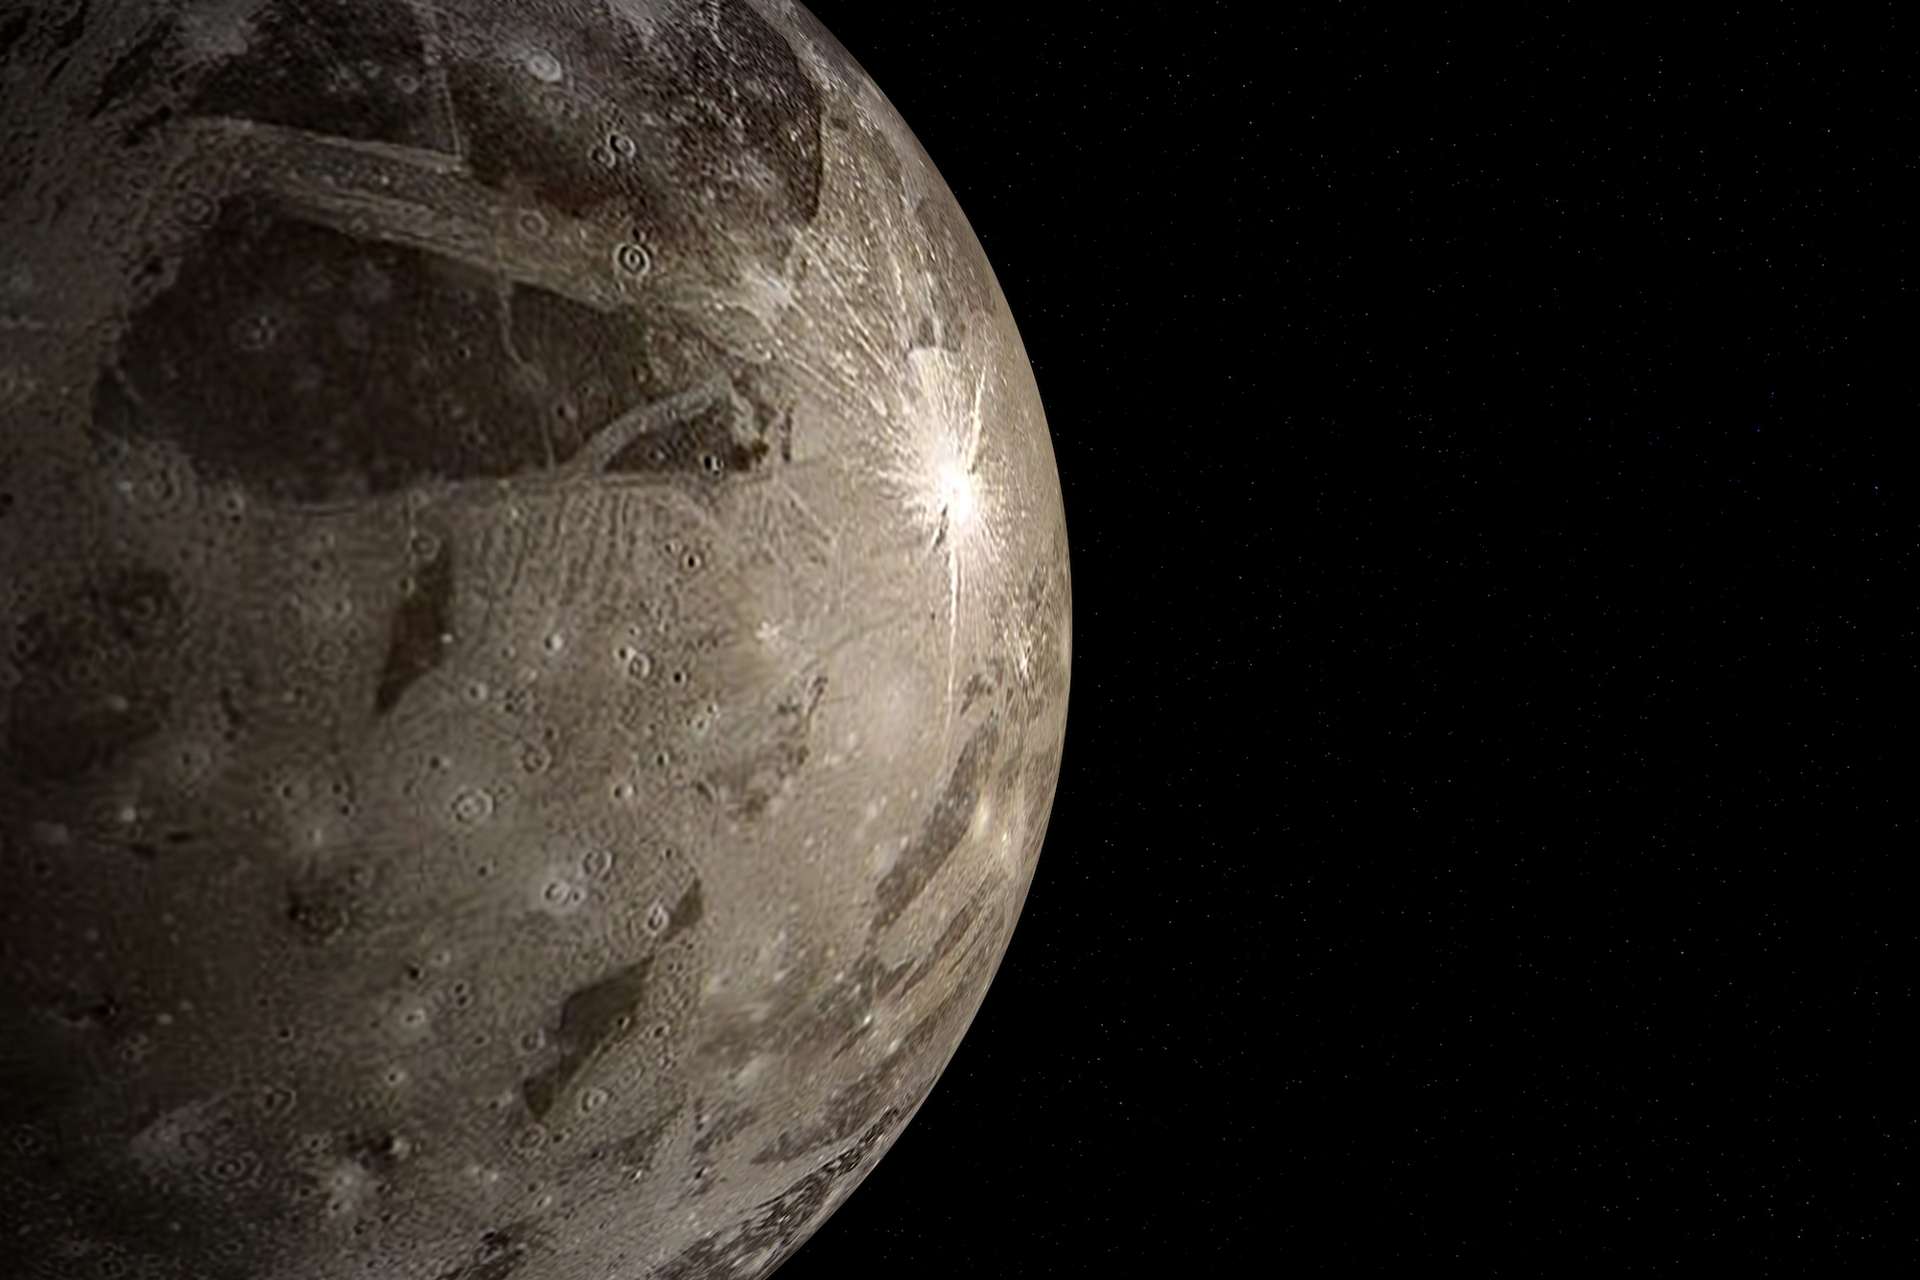 James Webb reveals amazing details about Ganymede’s surface